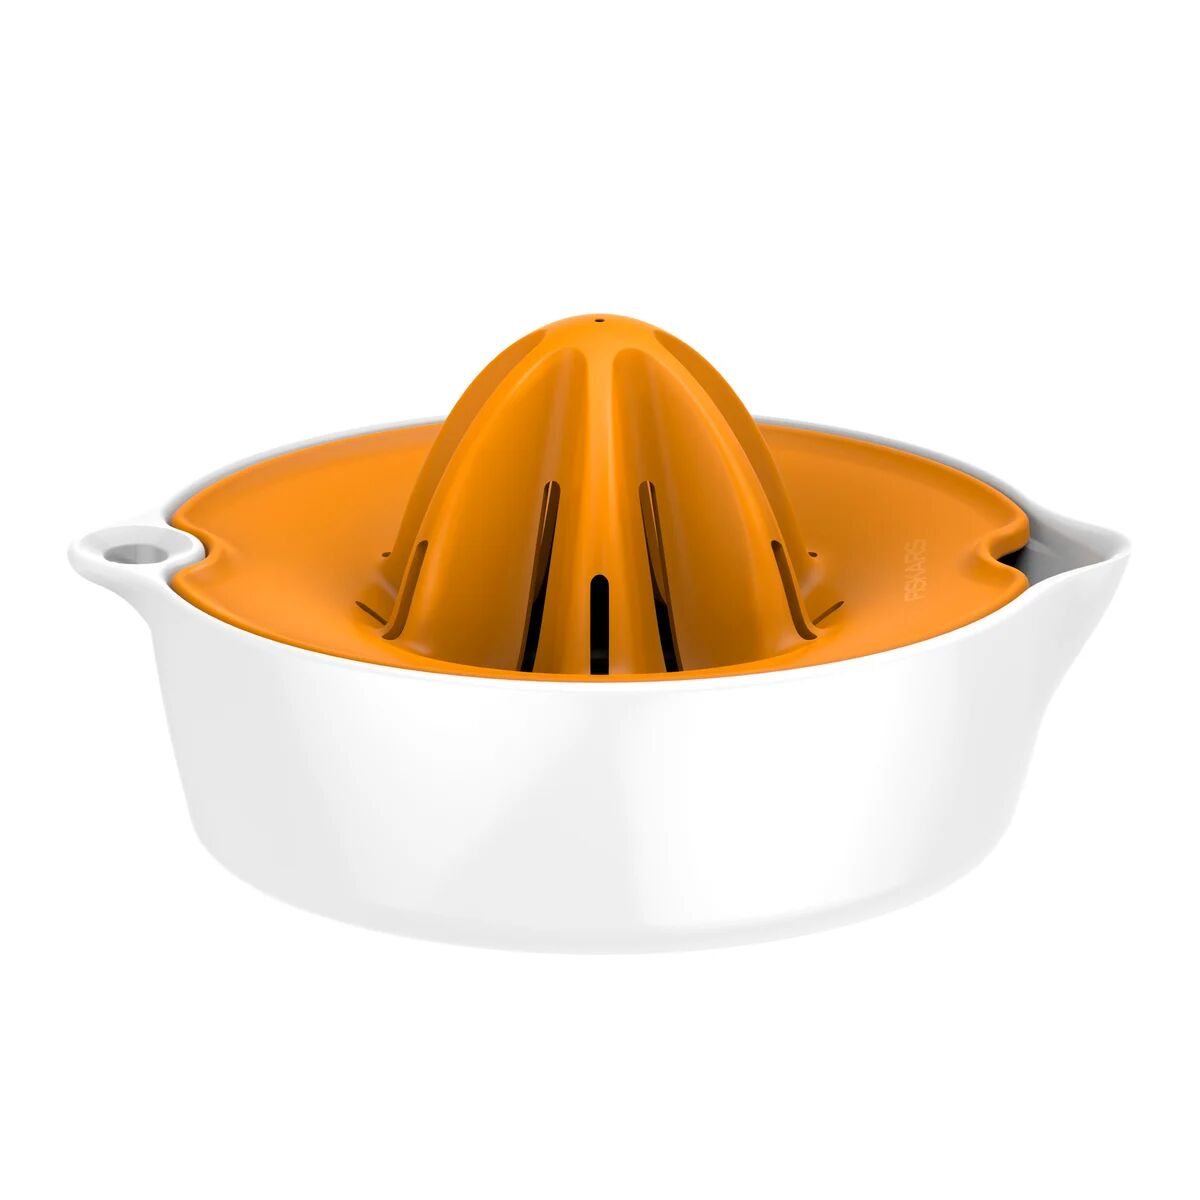 Fiskars Funcsjonal Form juicepresse oransje-hvit